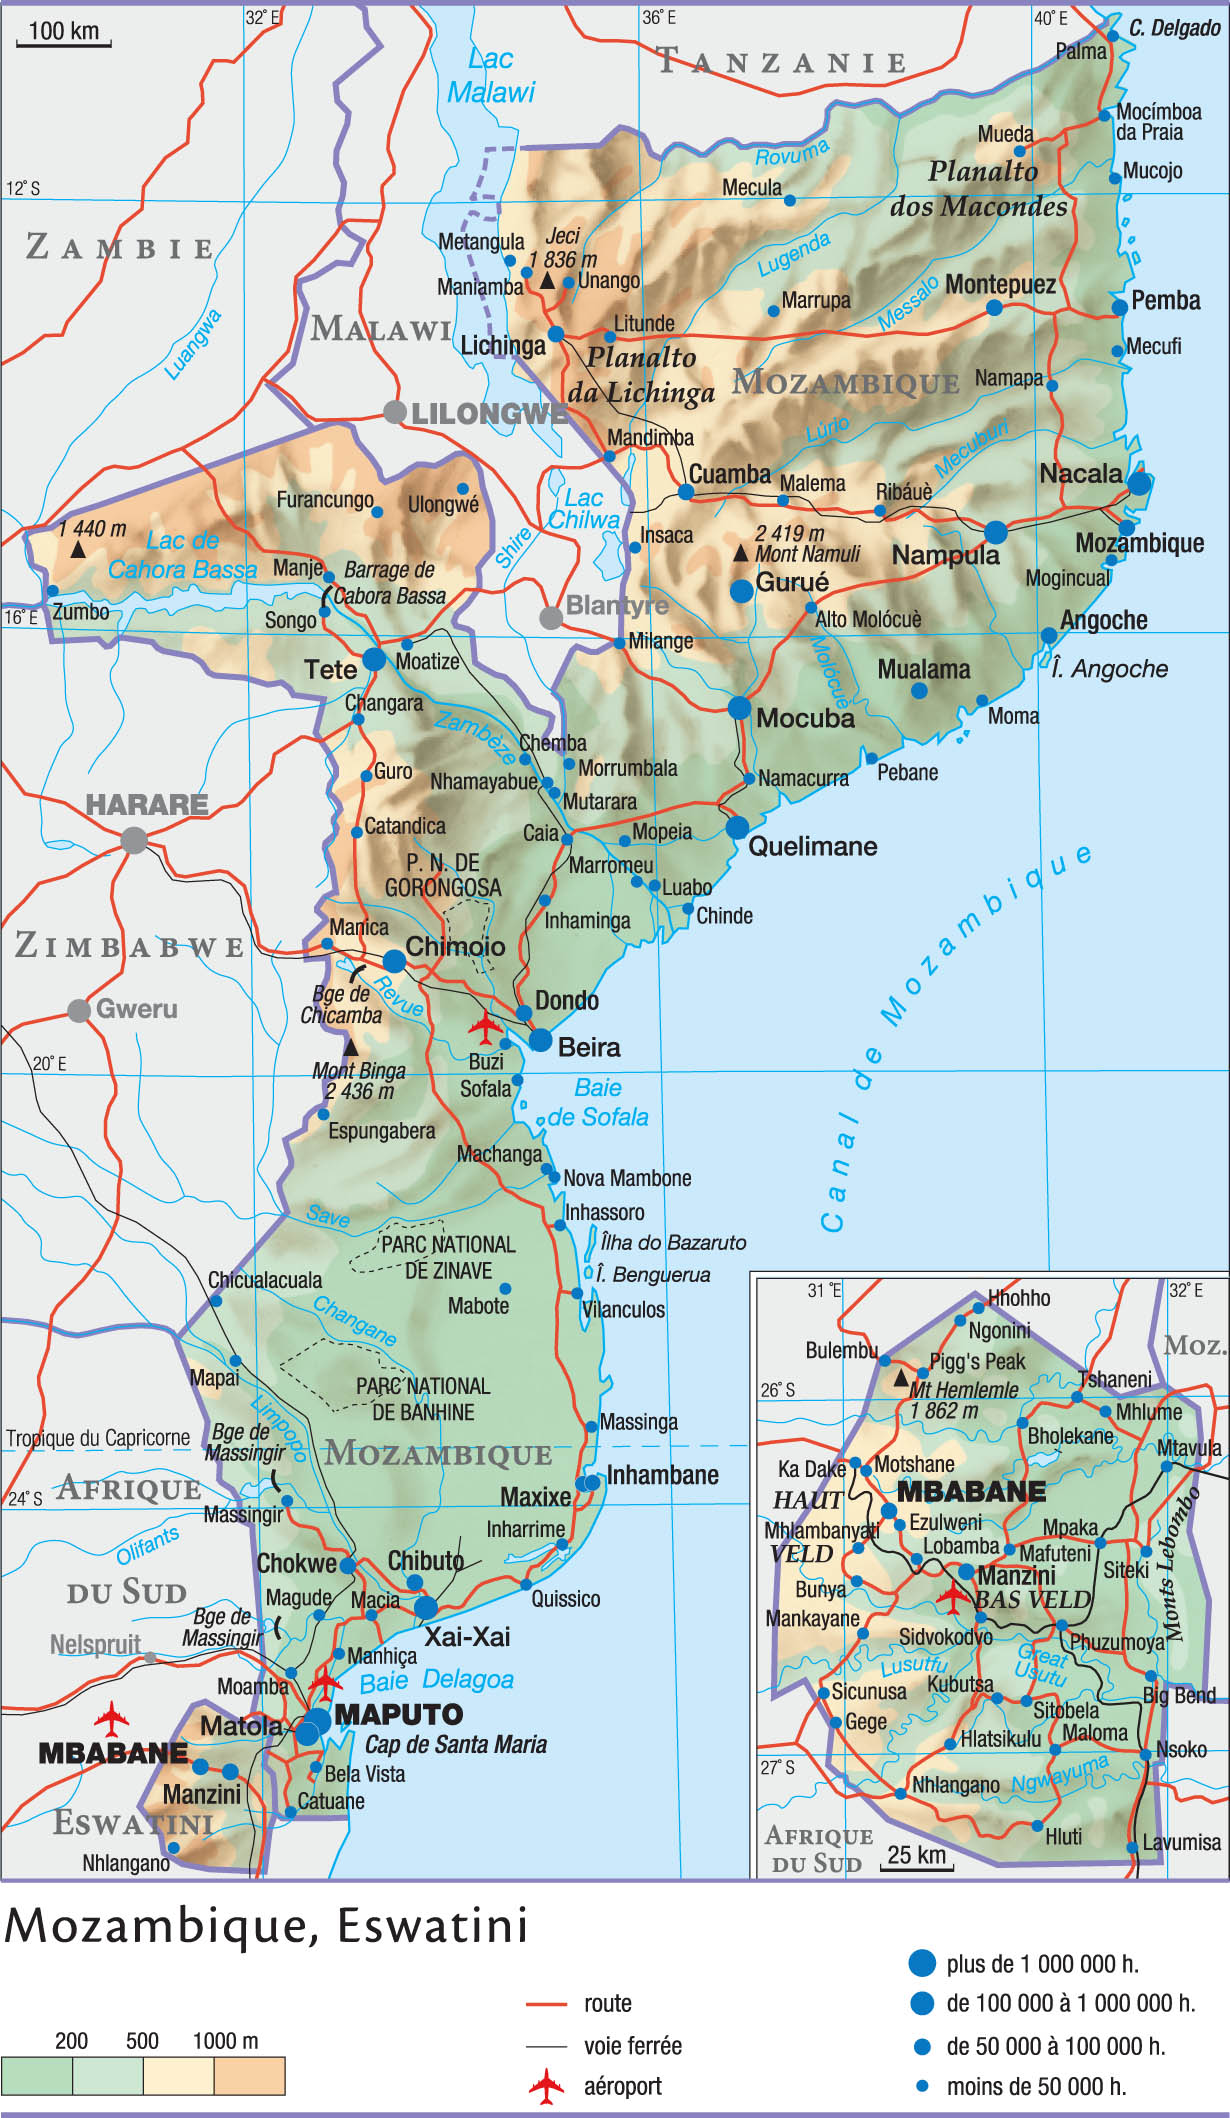 Mozambique - Eswatini